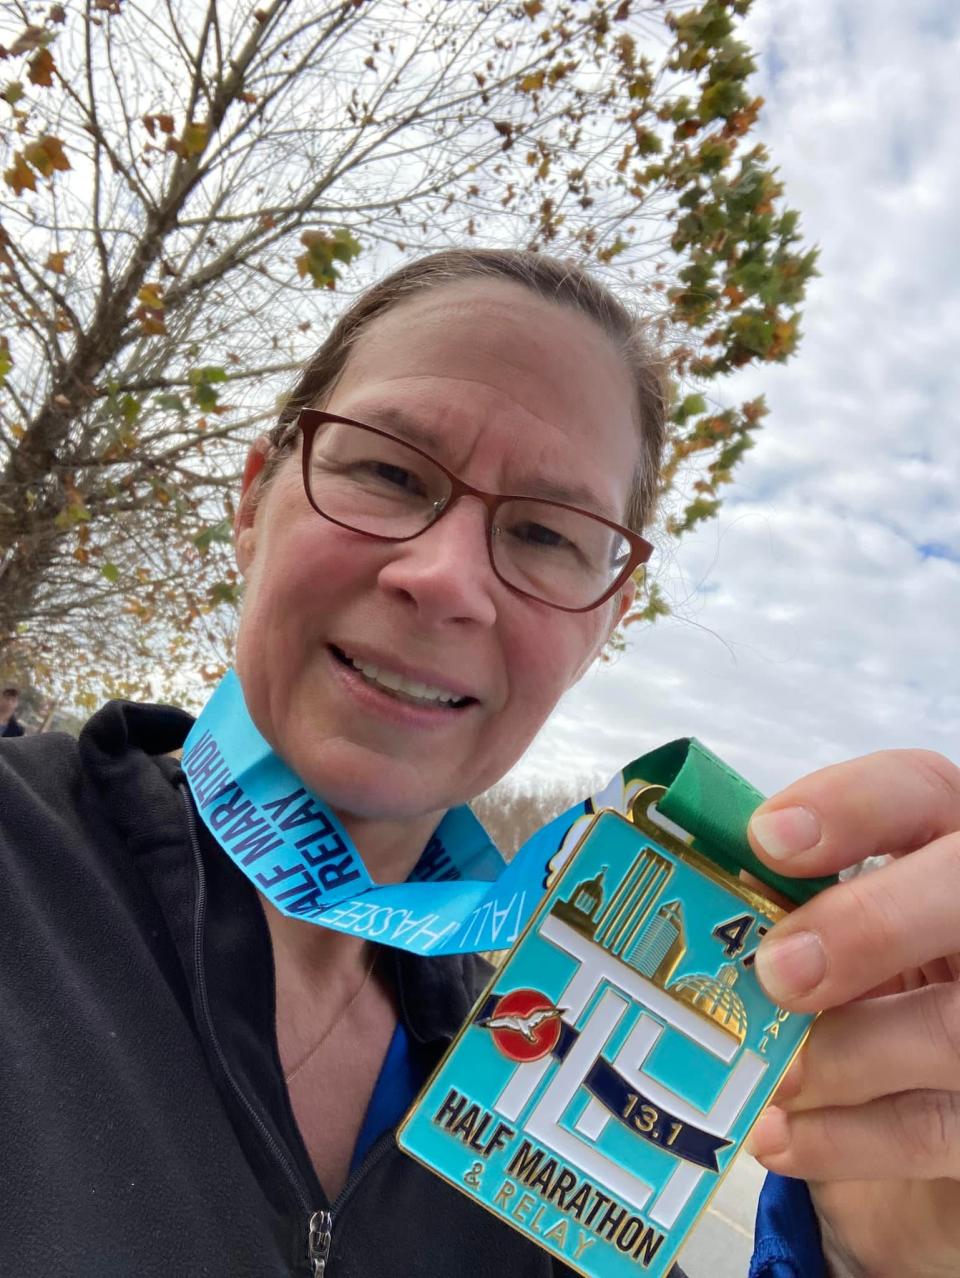 Ella Schwarz with her medal from Sunday's Tallahassee Half Marathon.